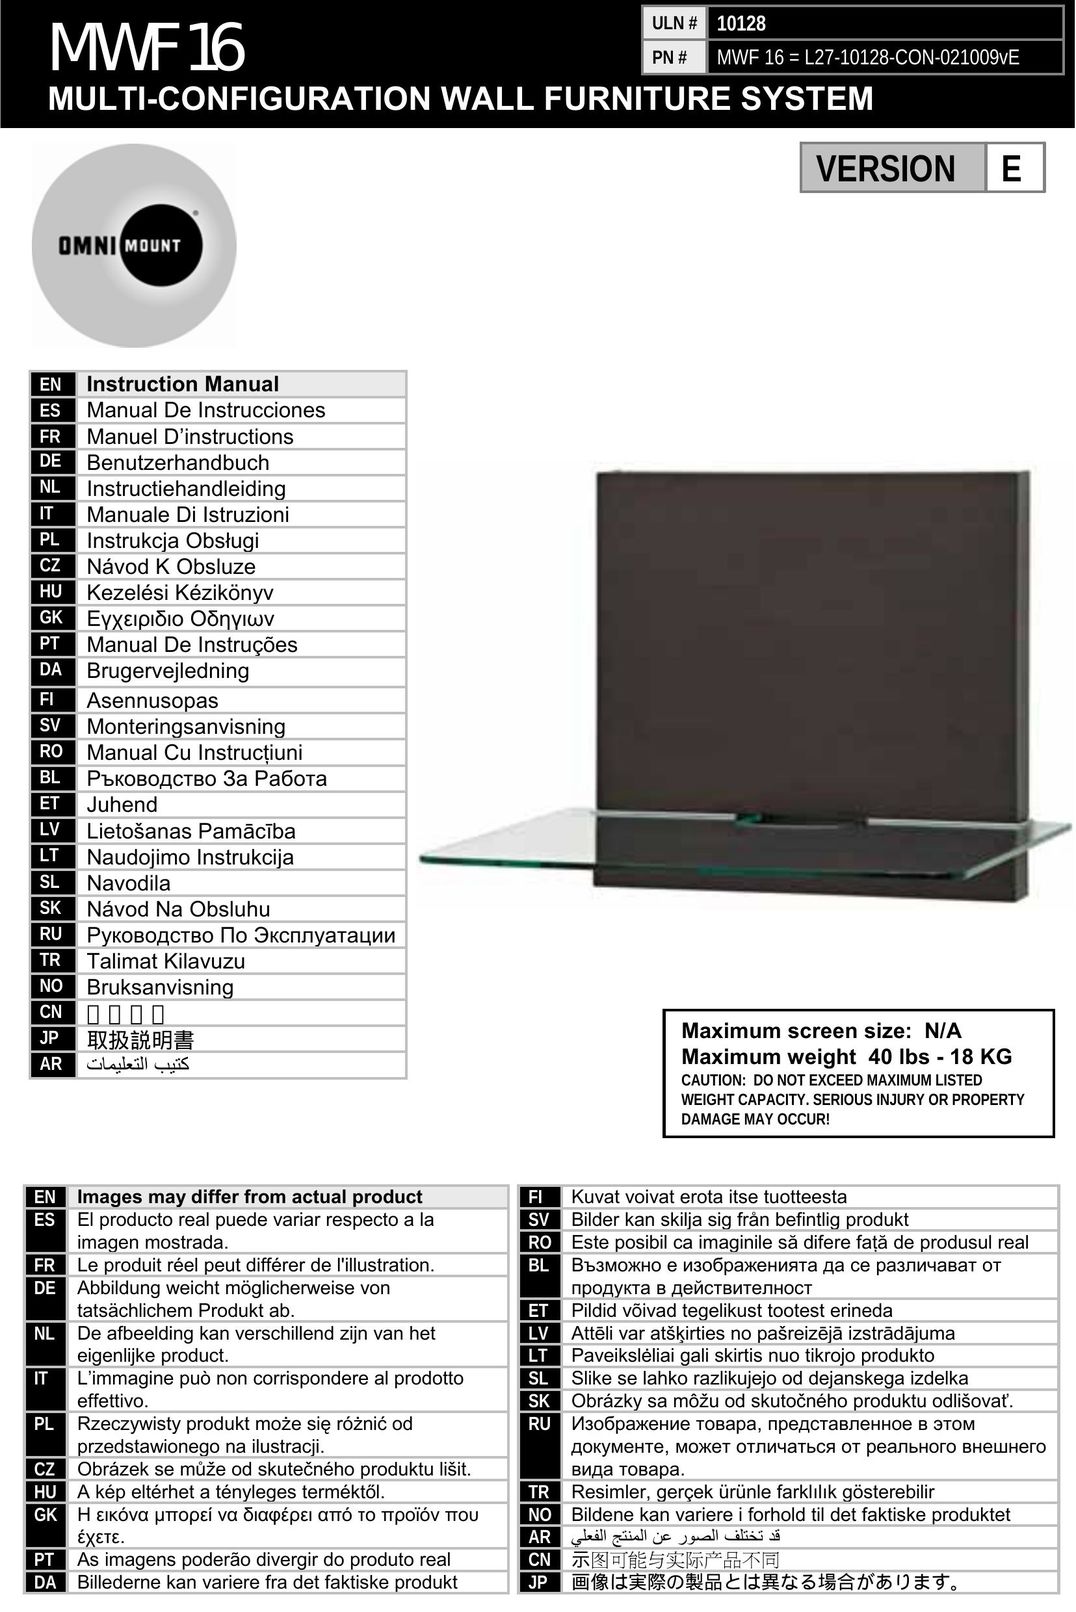 Omnimount MWF16 Indoor Furnishings User Manual